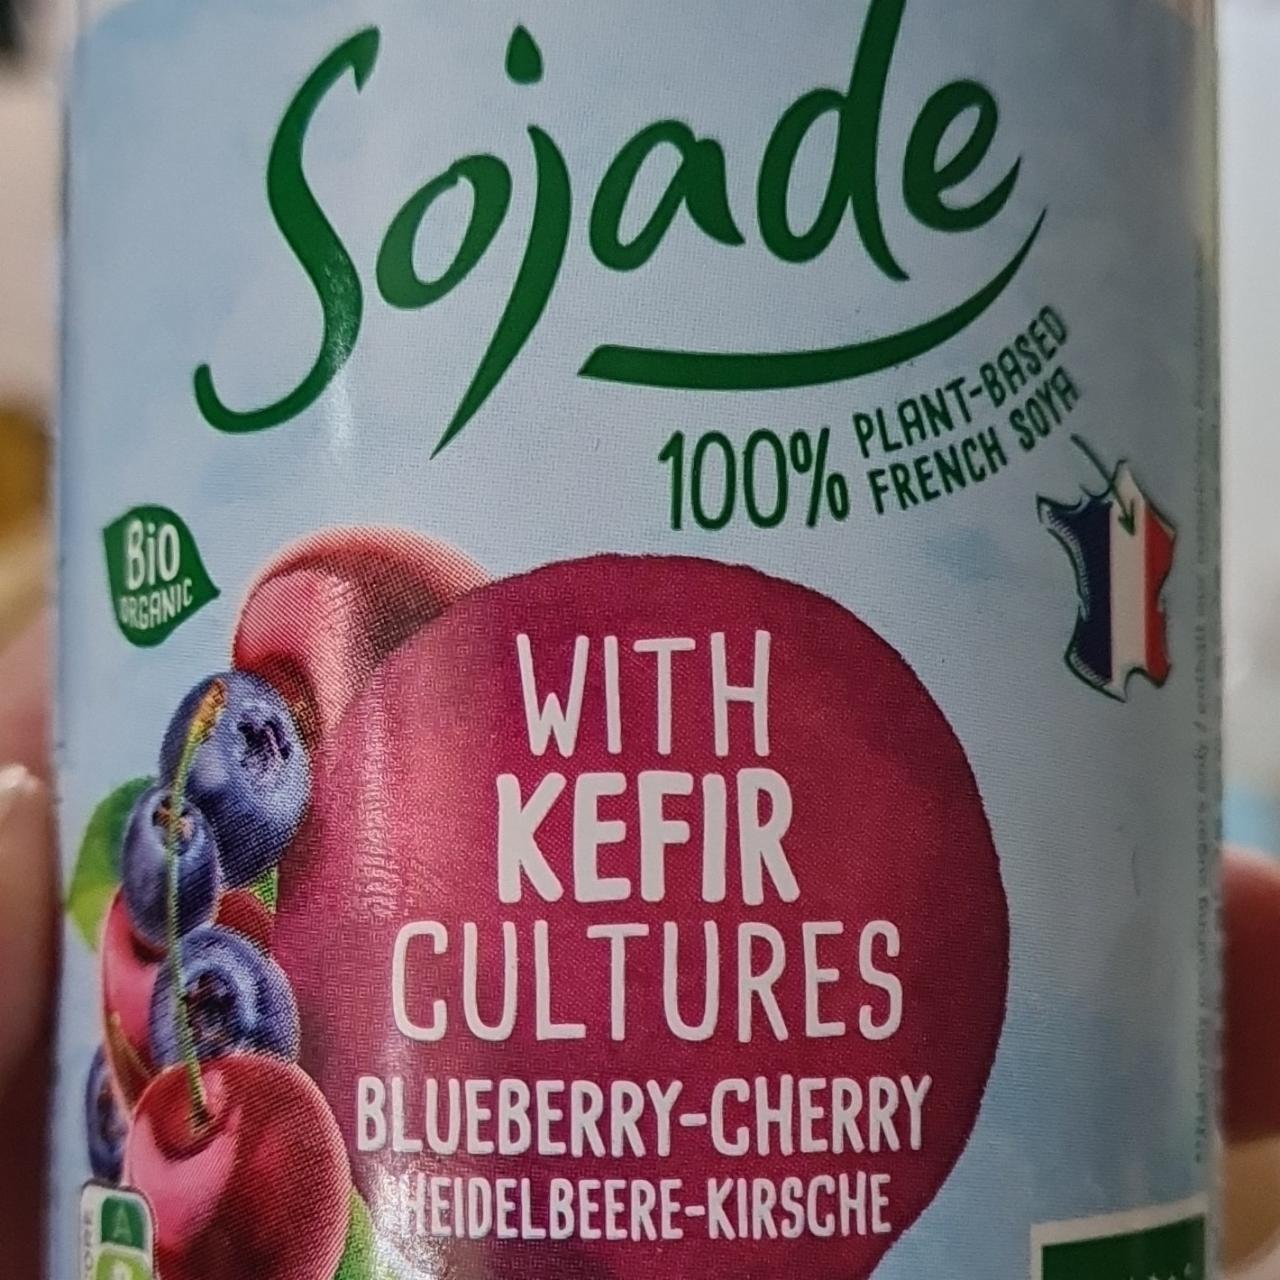 Fotografie - Blueberry-Cherry with kefir cultures Sojade